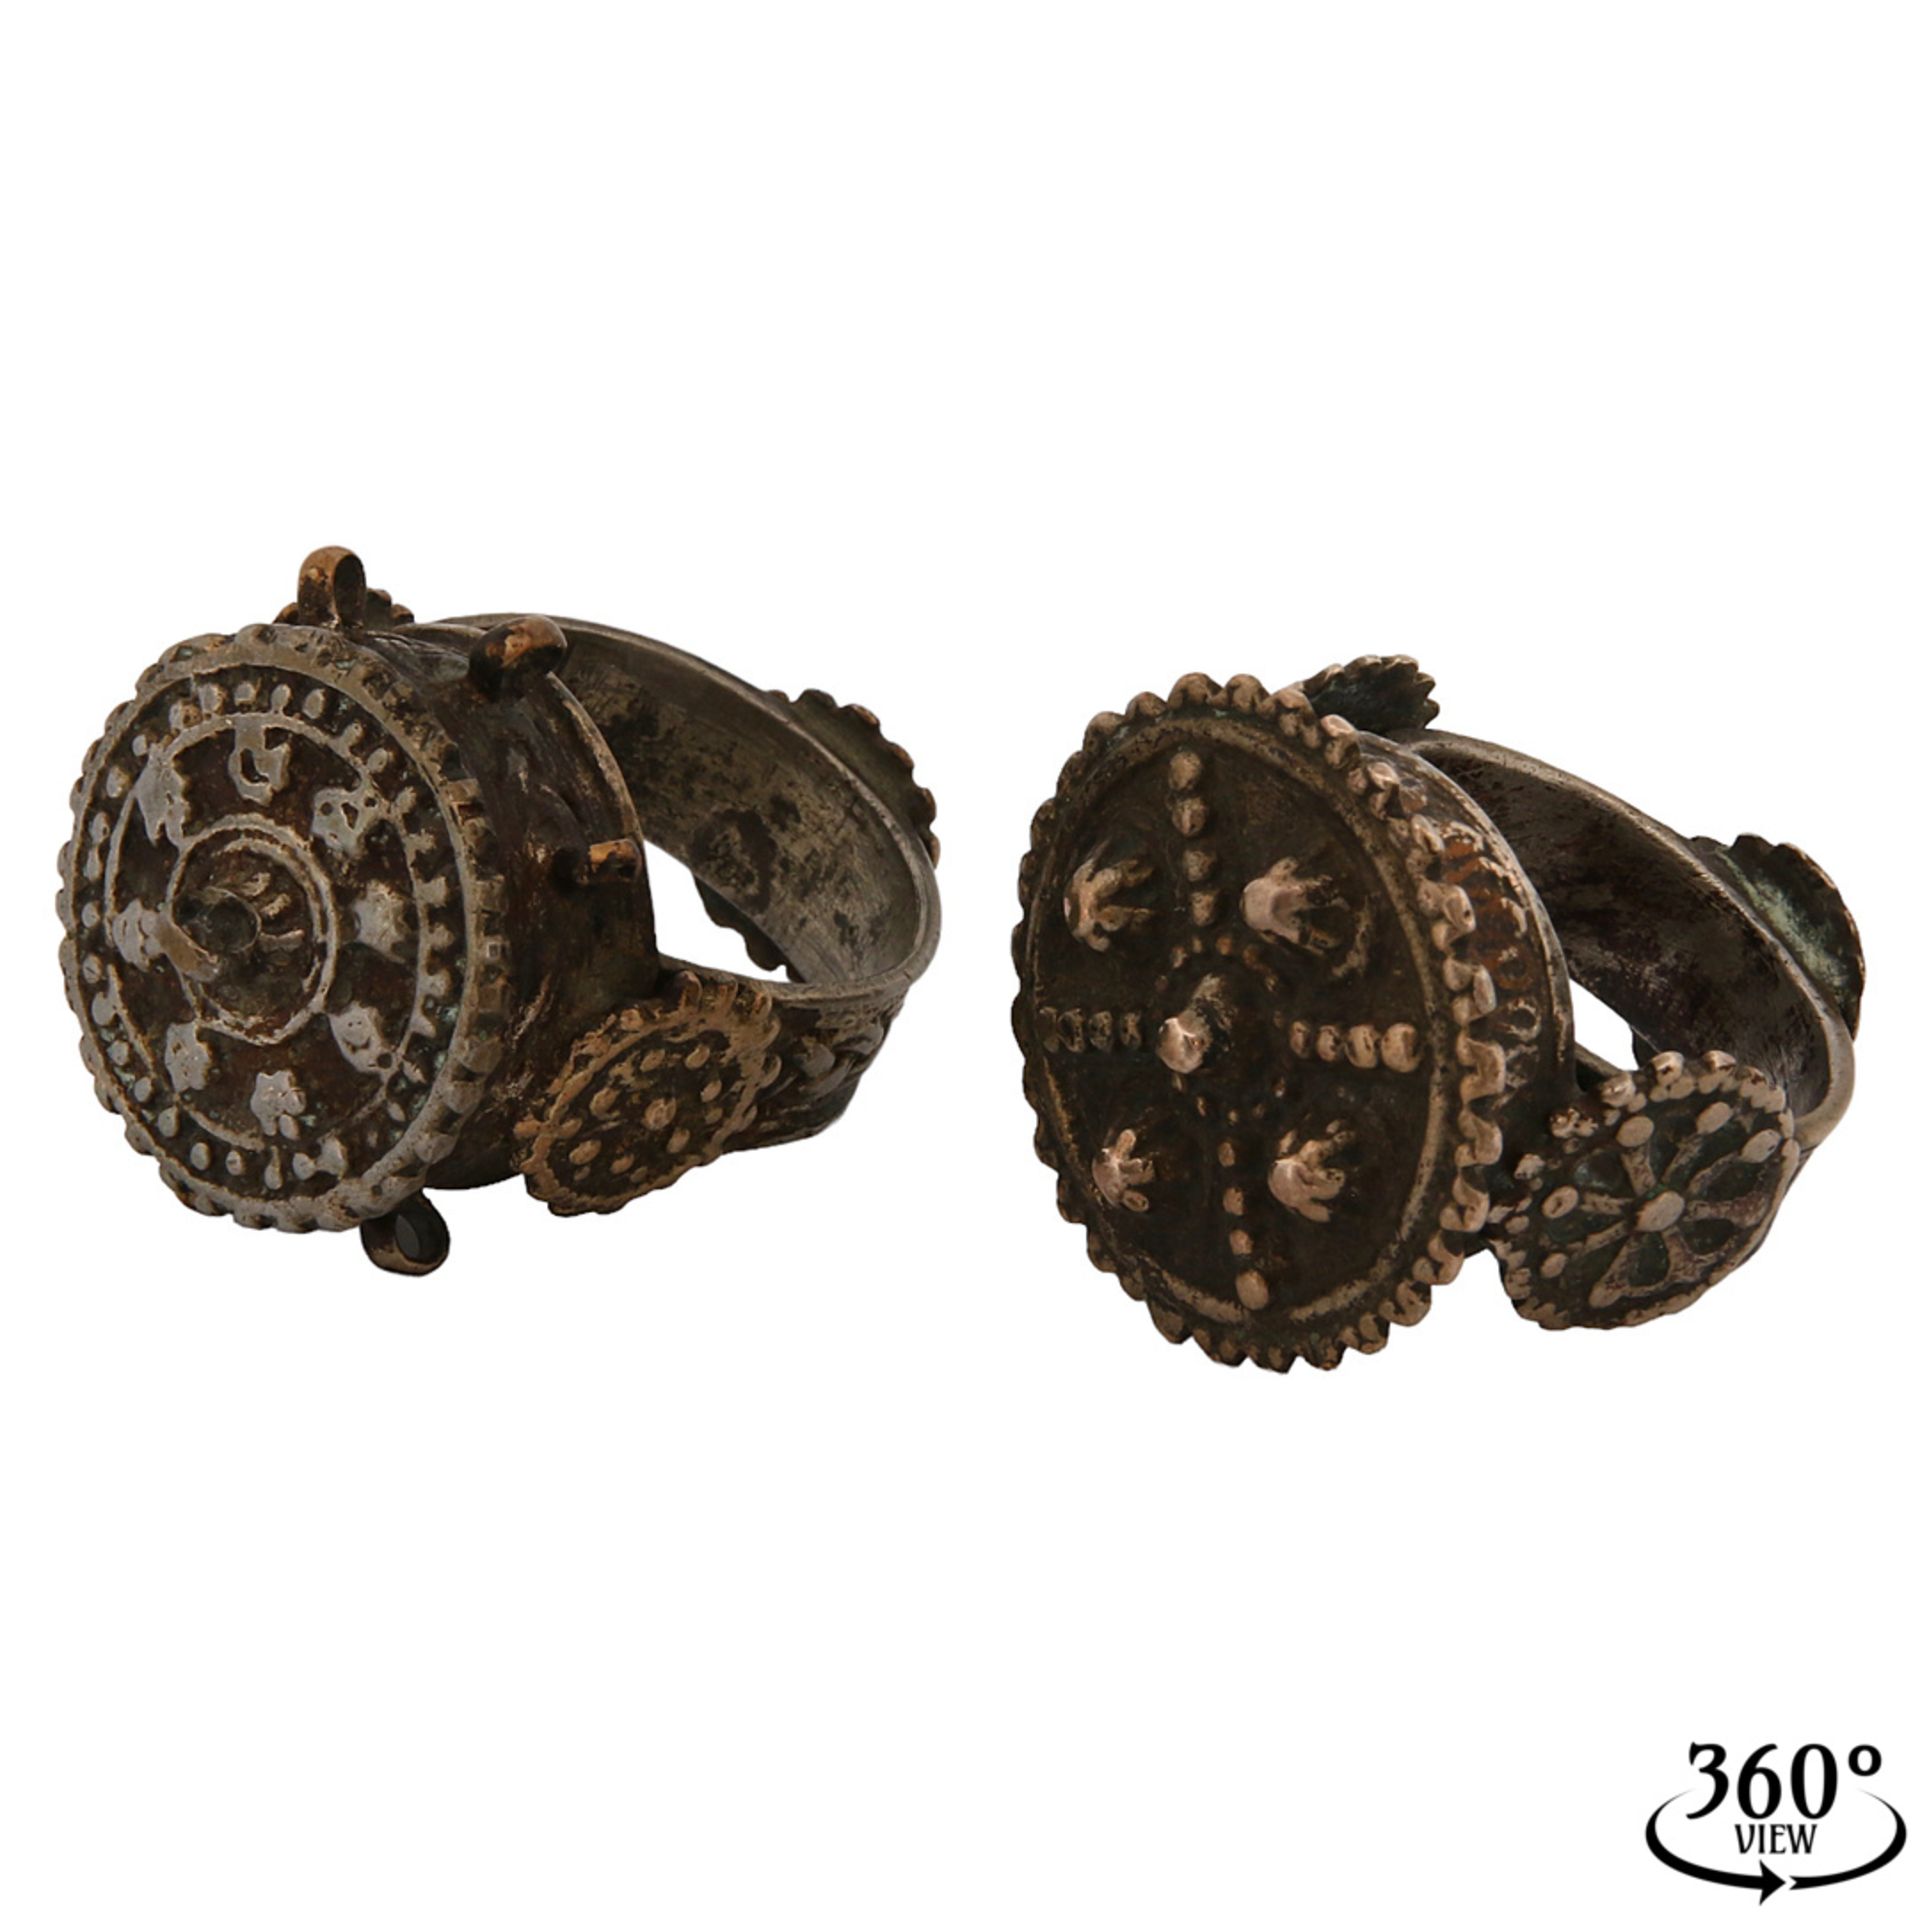 Pair of Jewish wedding rings, 19th century